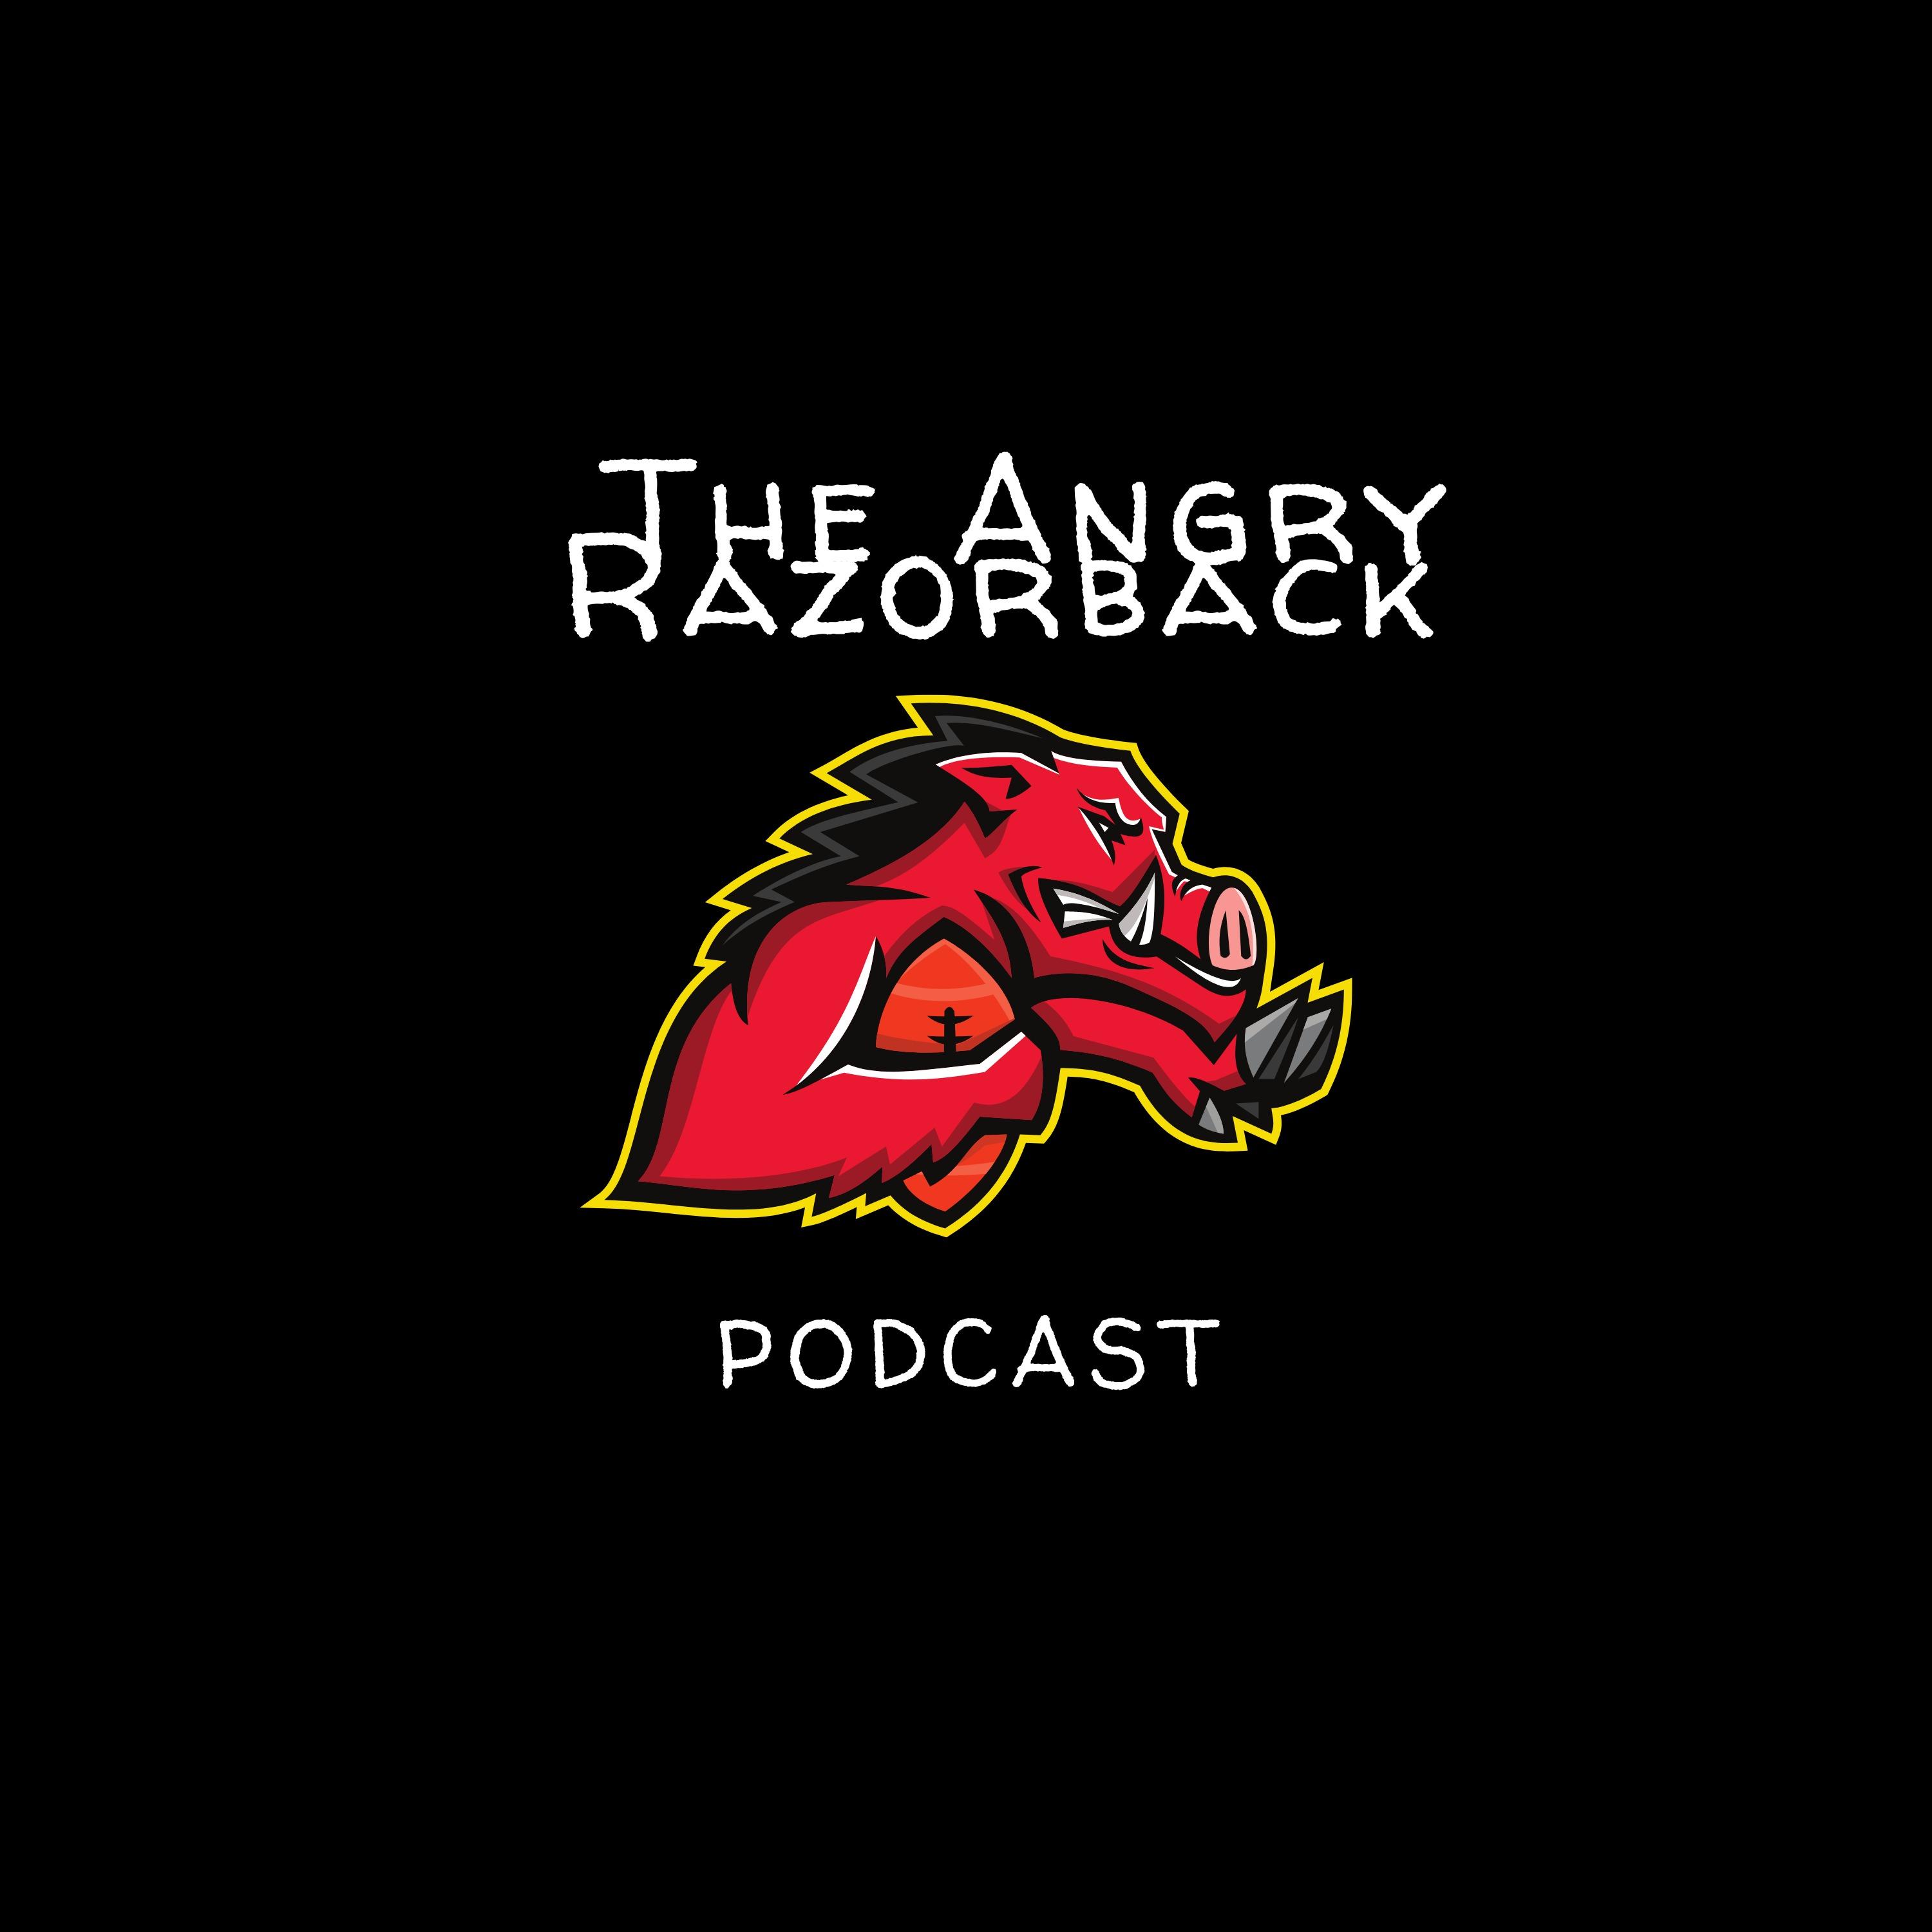 The Angry Razorback Podcast